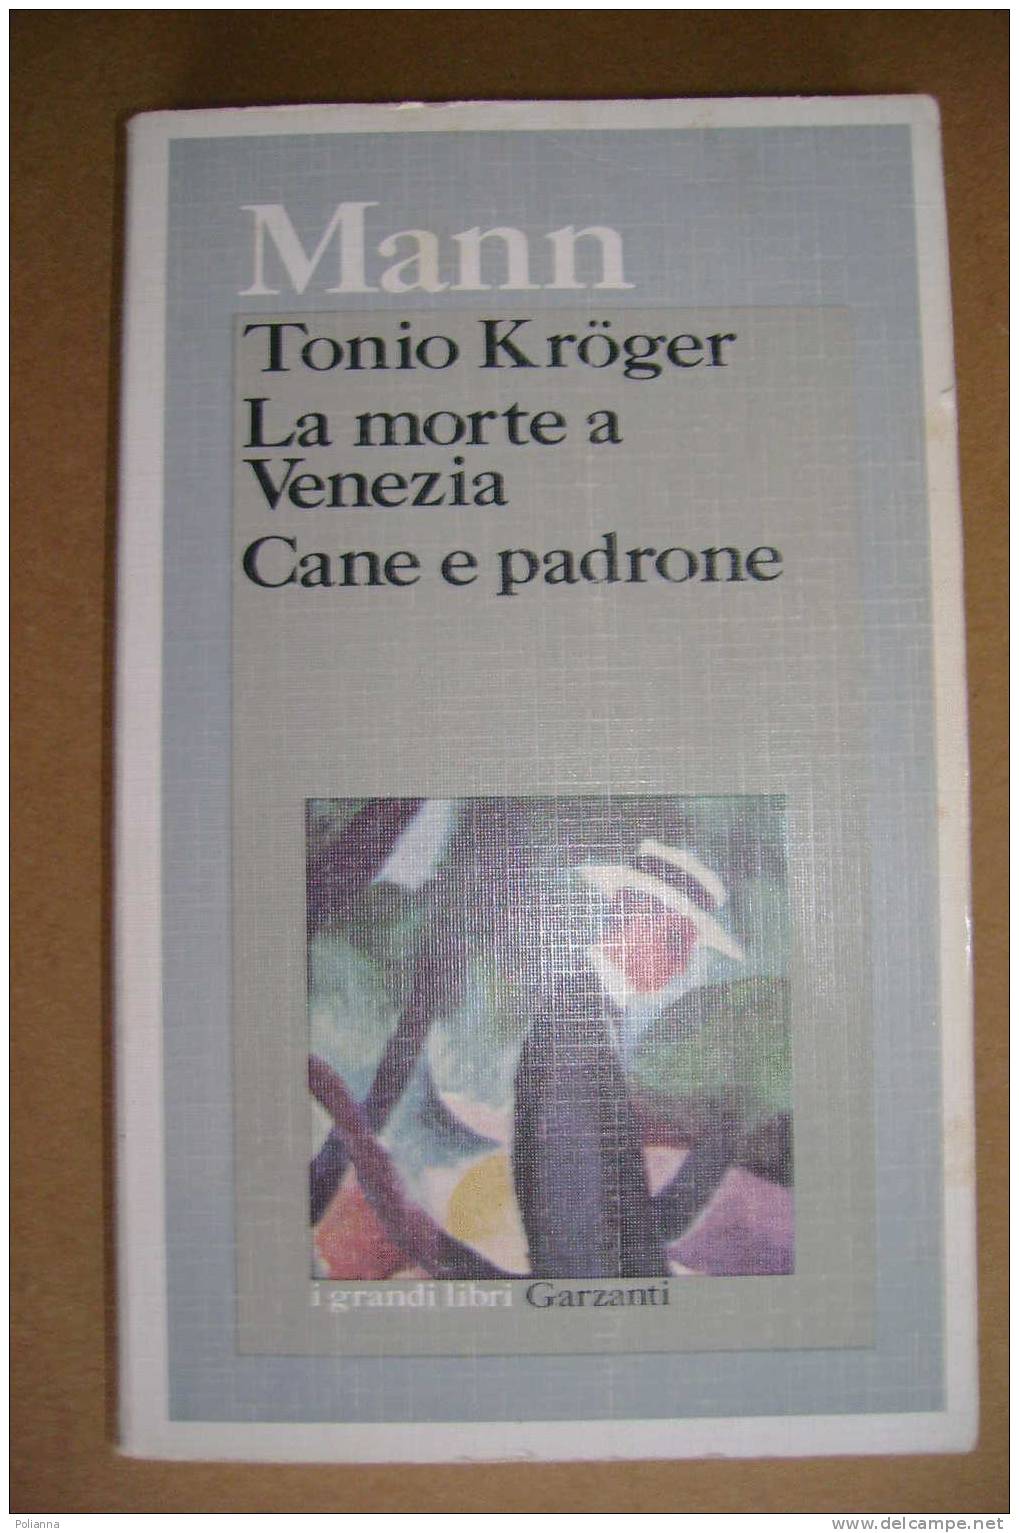 PAH/29 Mann TONIO KROGER - LA MORTE A VENEZIA - CANE E PADRONE I Grandi Libri  Garzanti 1992 - Tales & Short Stories